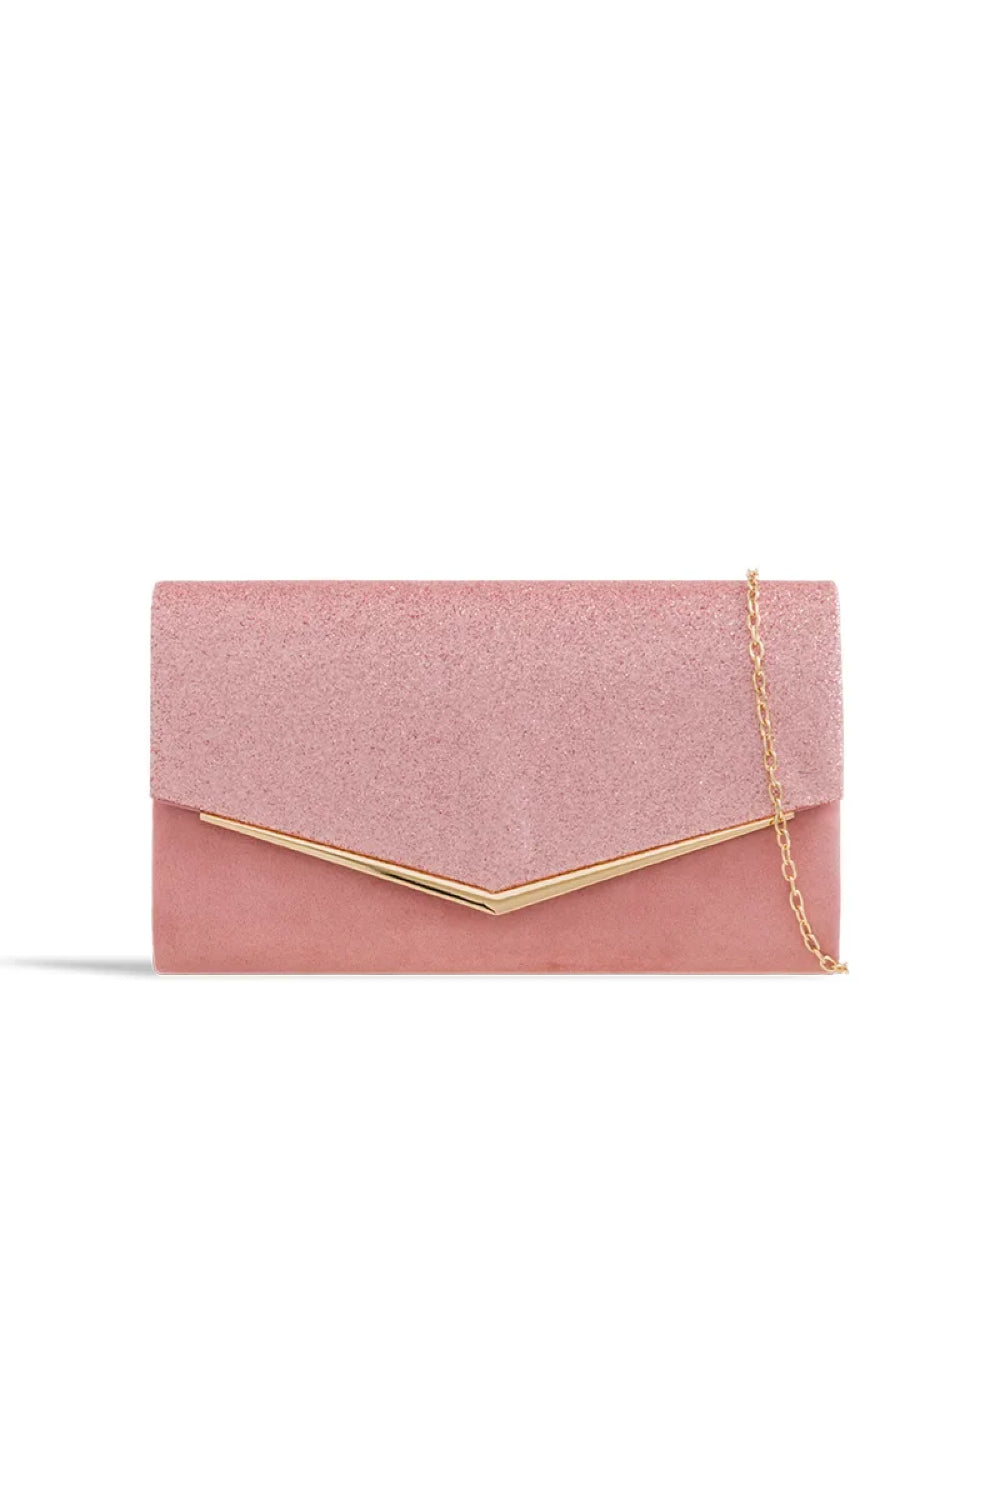 Blush Glitter Envelope Clutch Bag